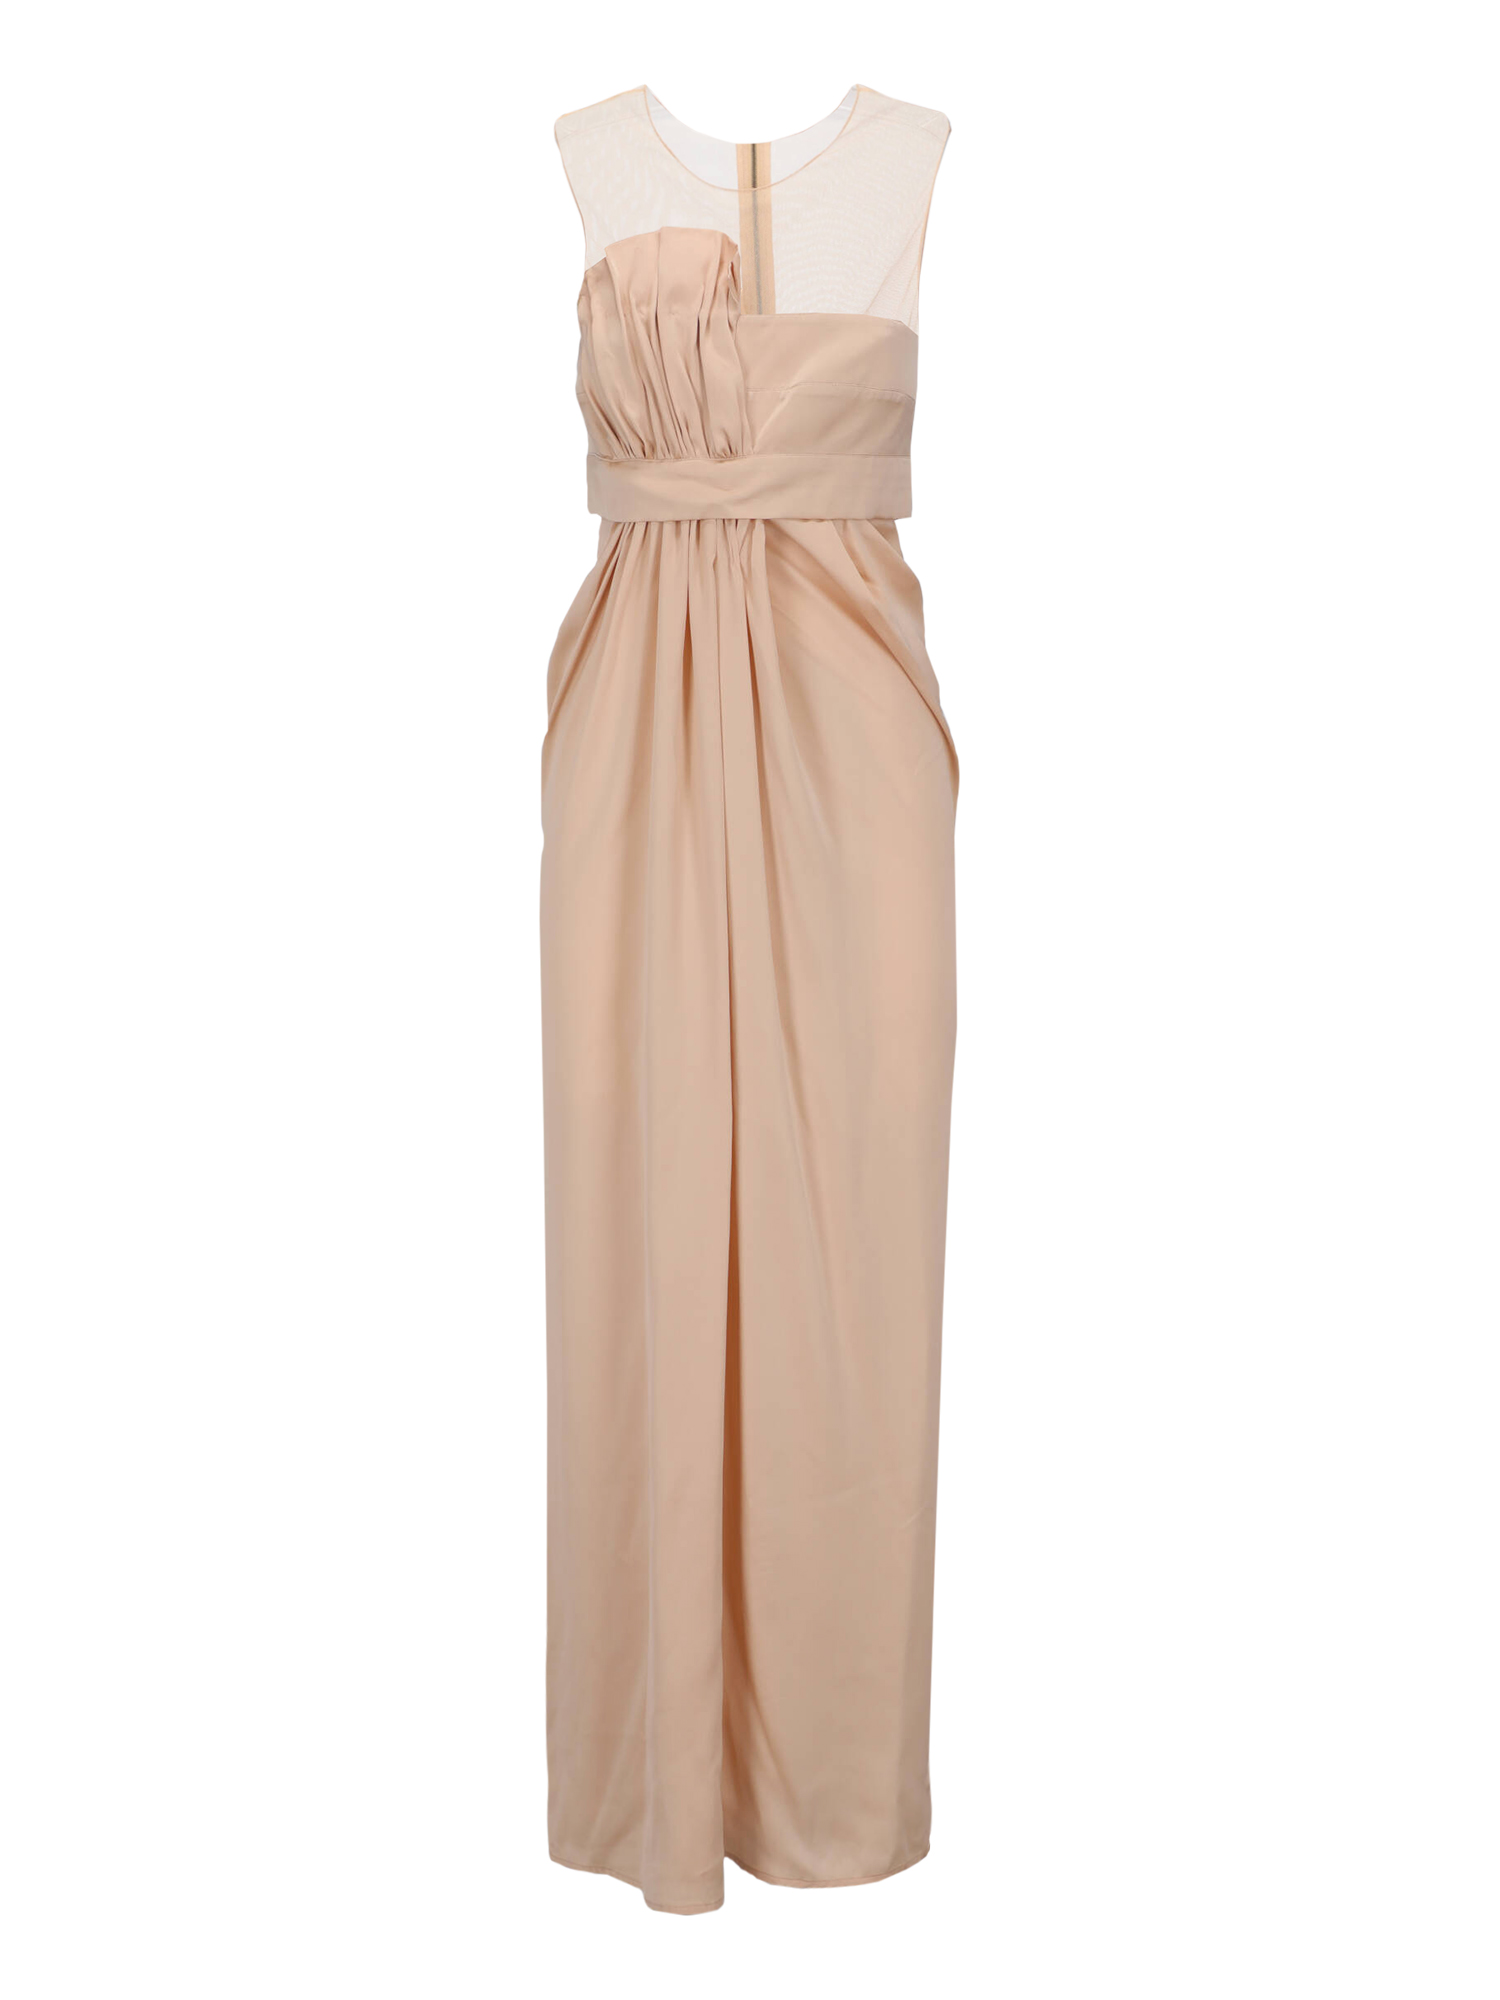 Robes Pour Femme - Stella Mccartney - En Silk Pink - Taille:  -